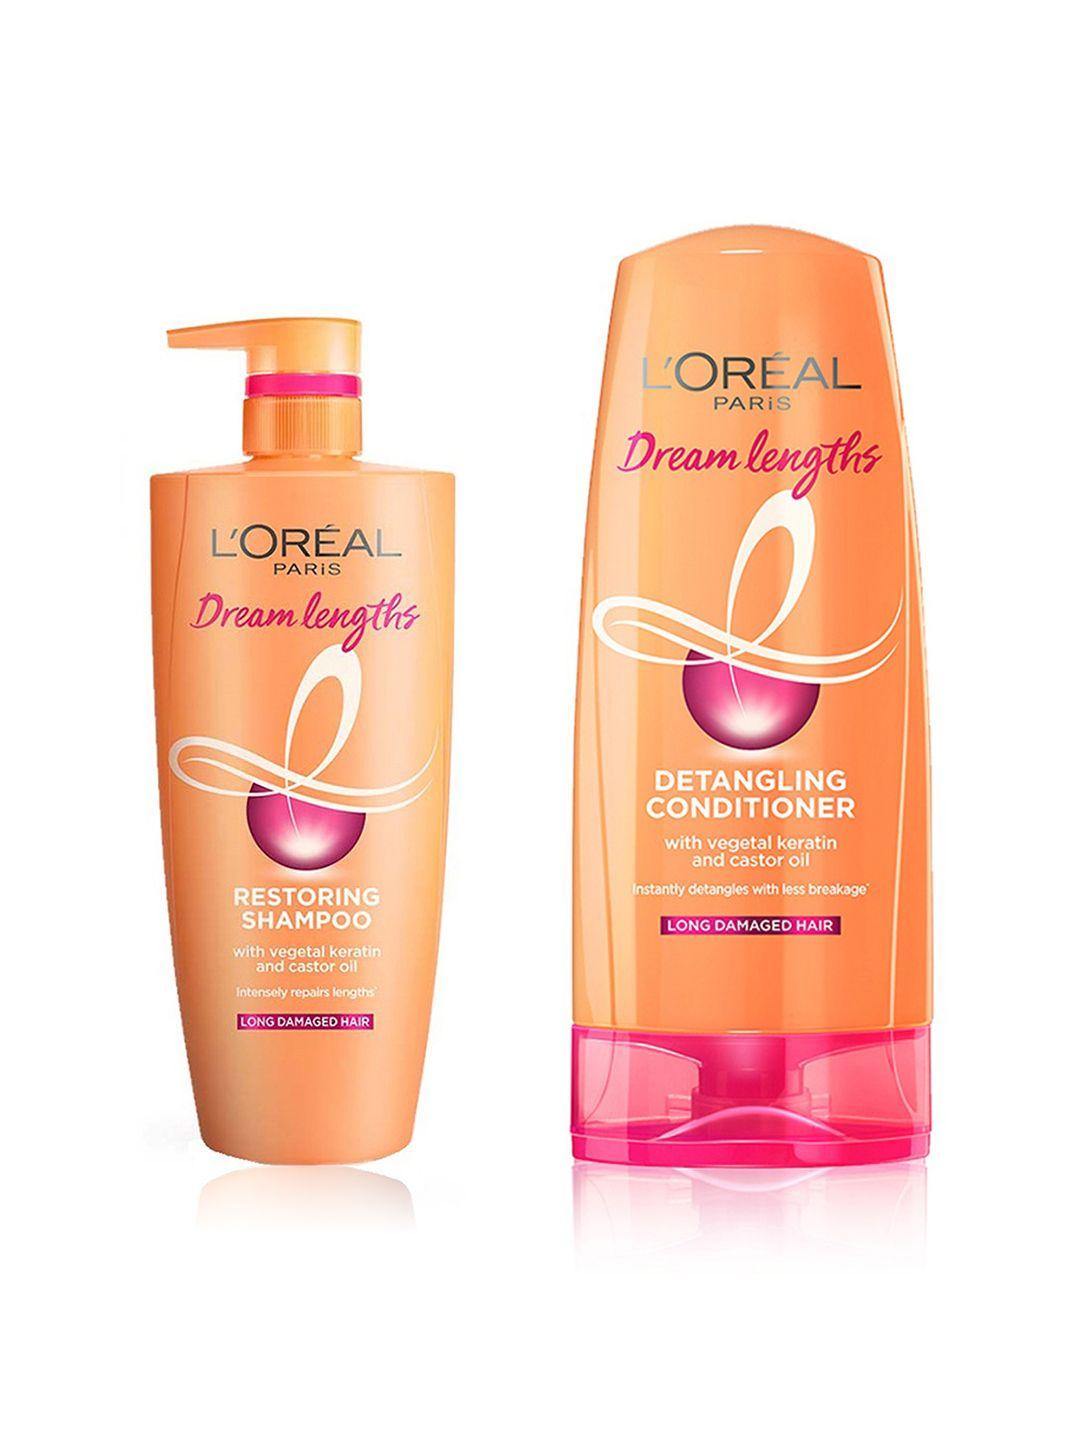 loreal paris dream length restoring shampoo 650ml & detangling conditioner 180ml